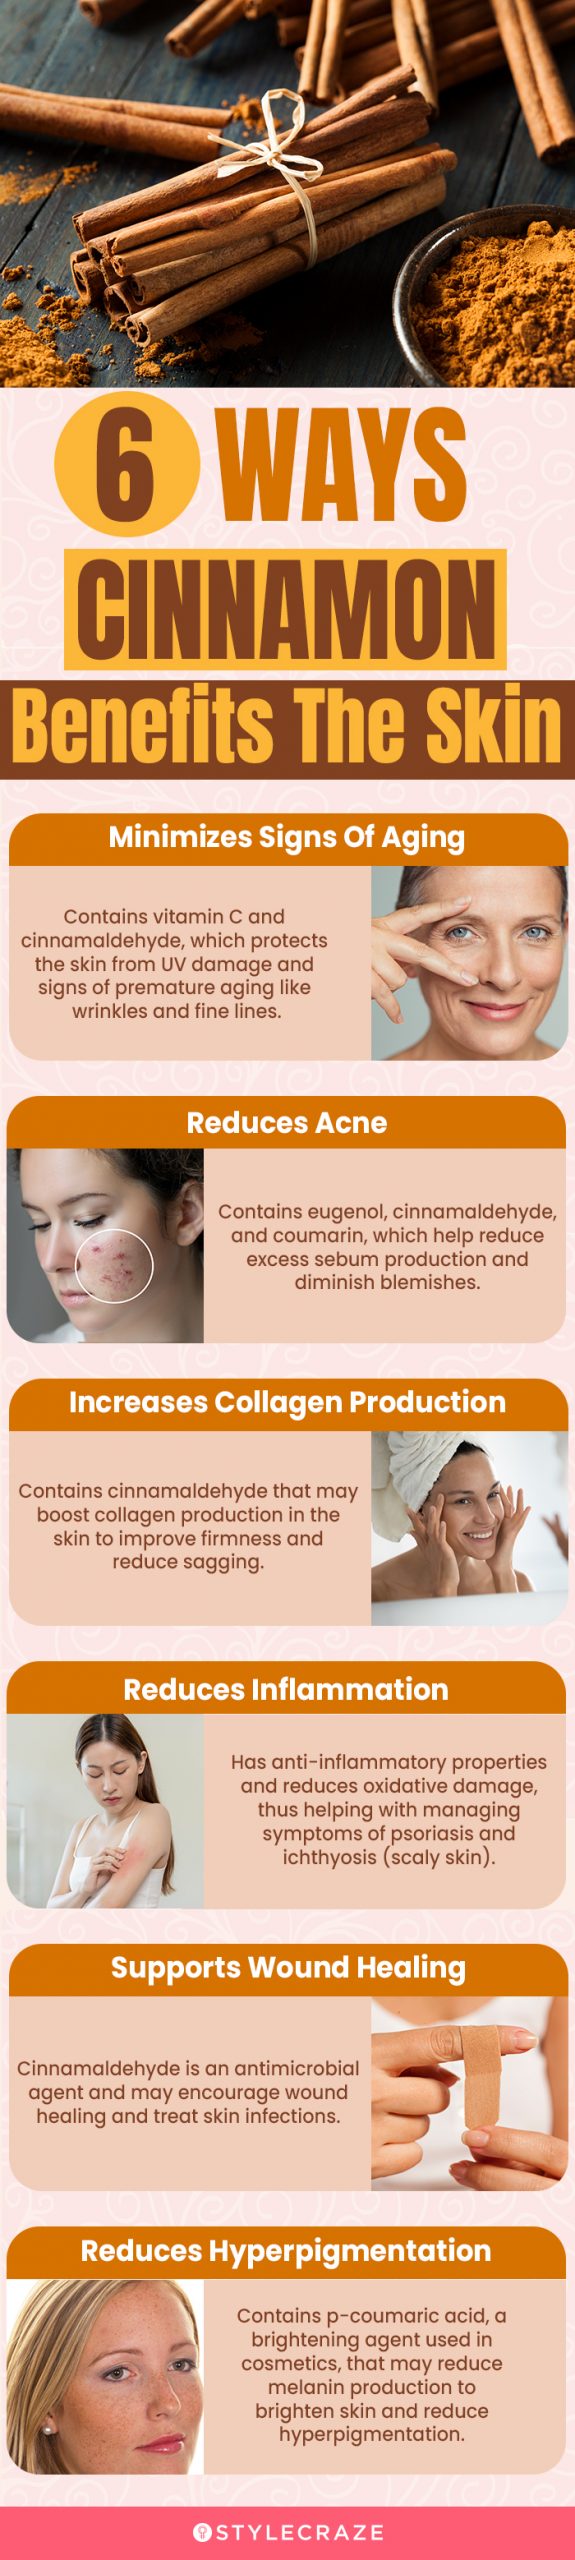 6 ways cinnamon benefits the skin (infographic)